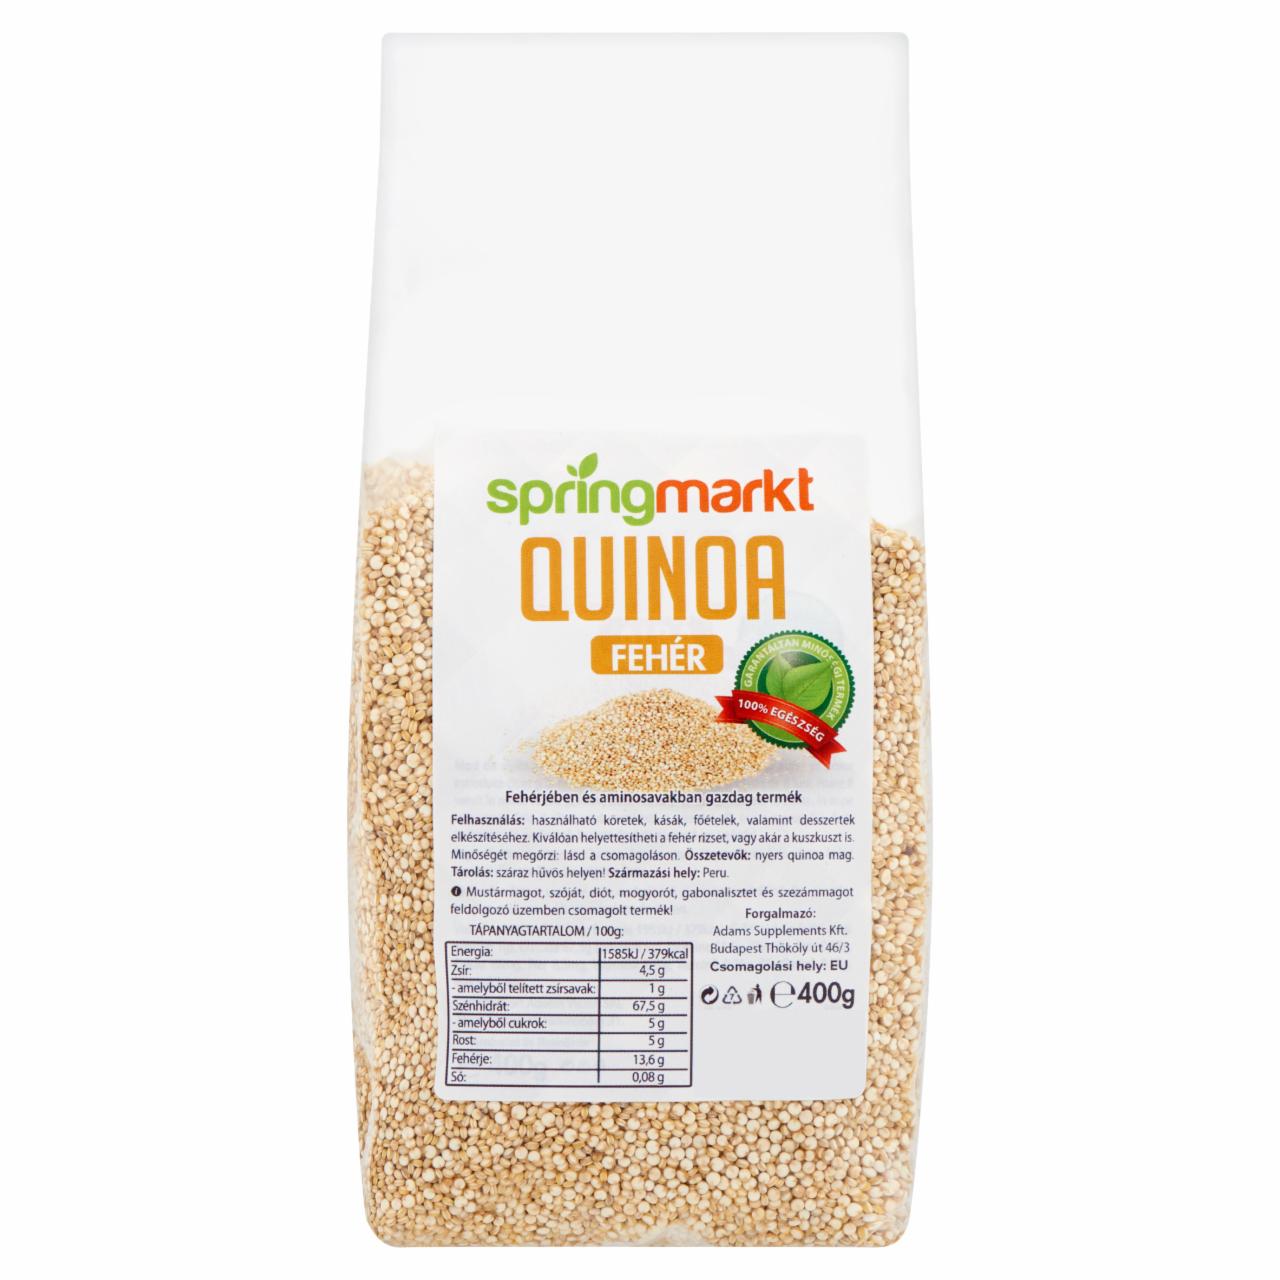 Képek - Springmarkt fehér quinoa 400 g